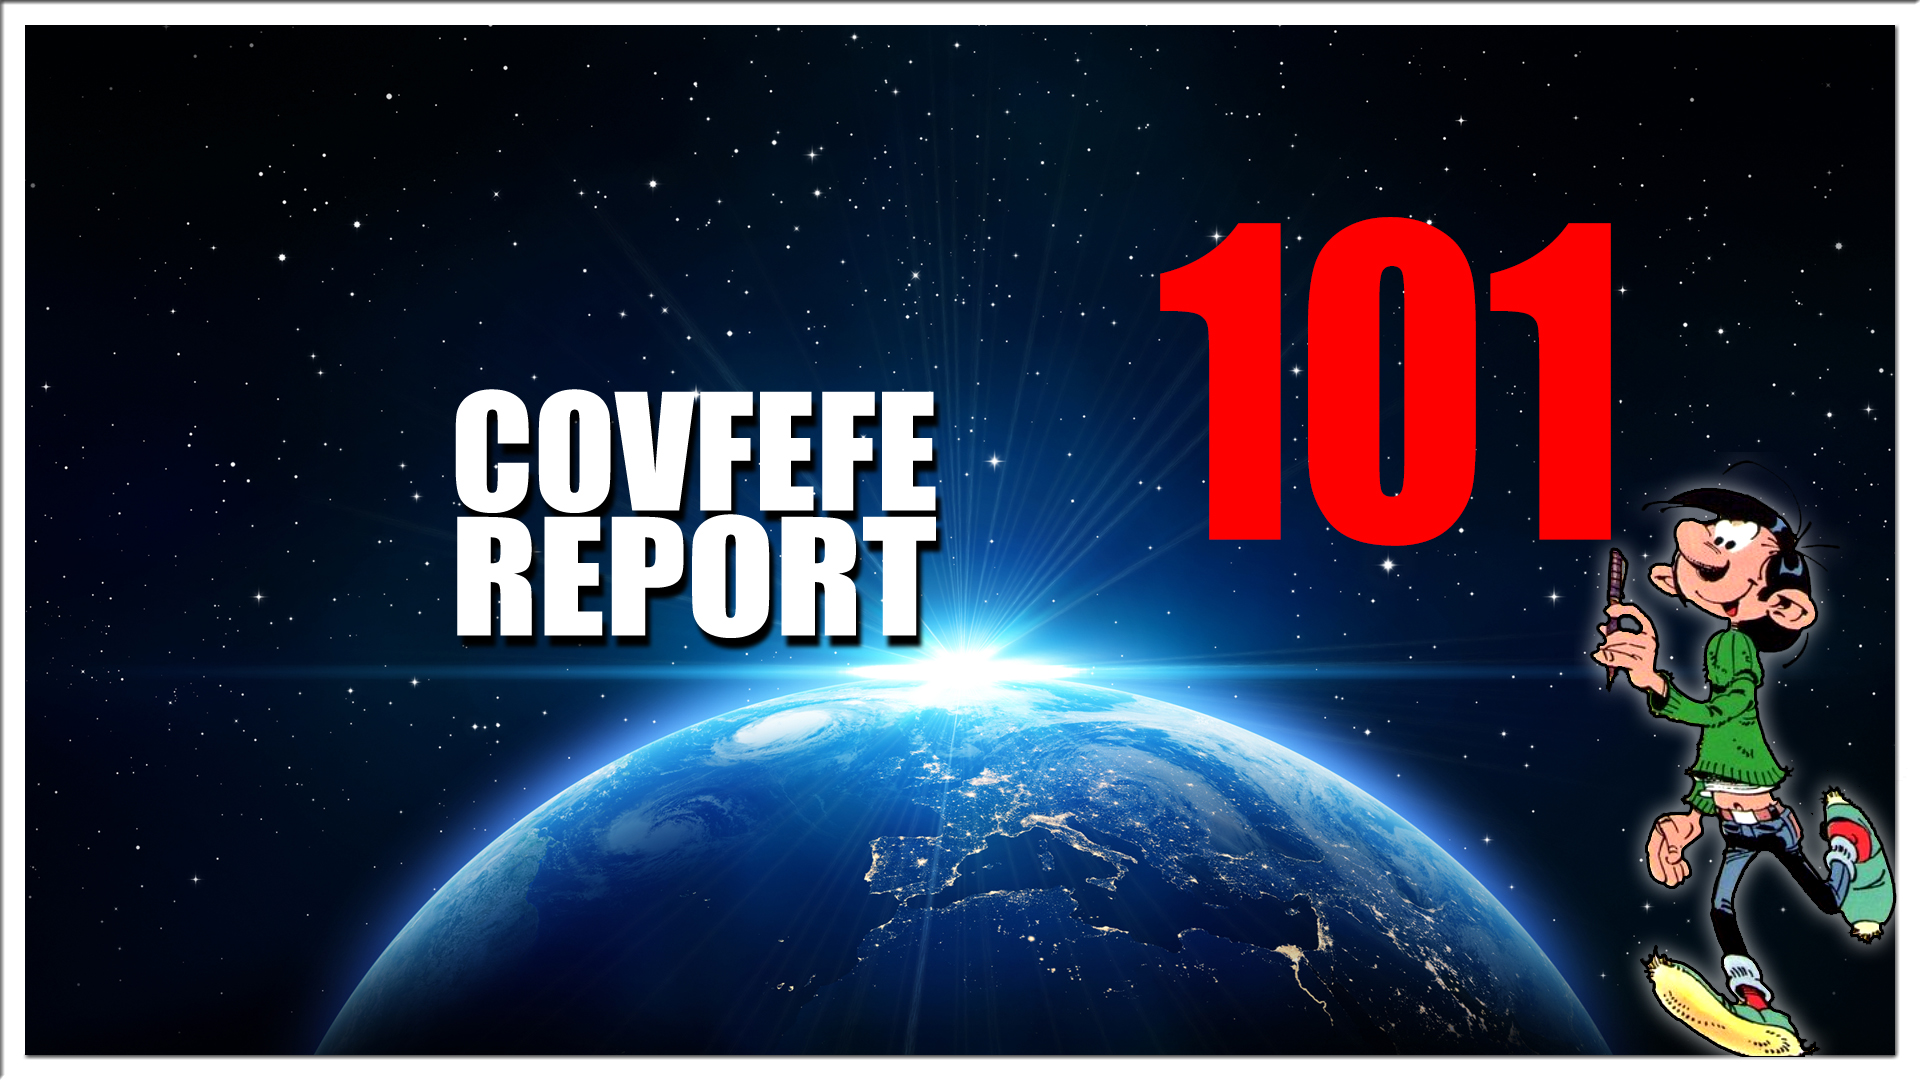 Covfefe Report 101. Burgerjournalisten onder vuur!